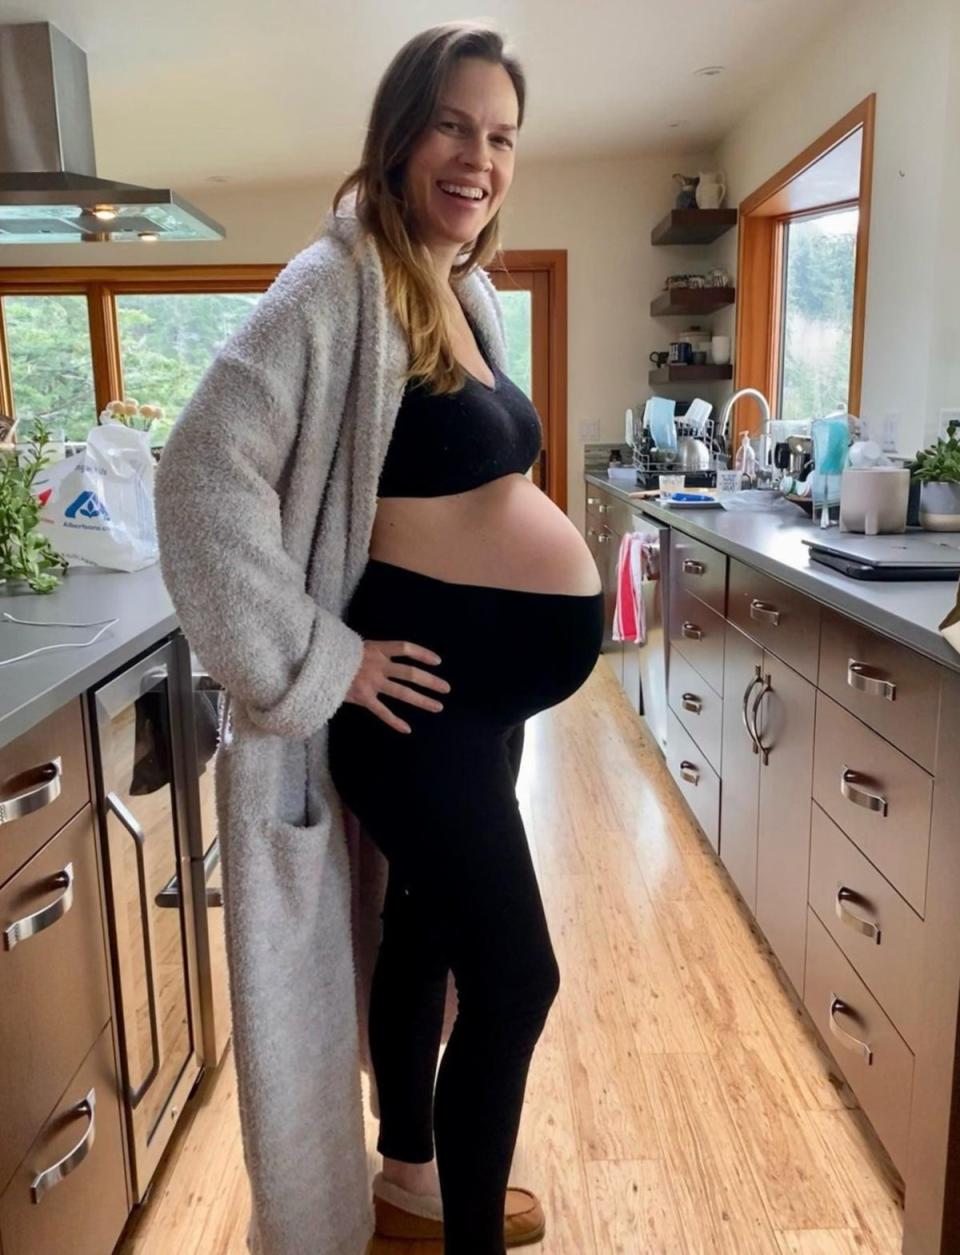 Last month Hilary Swank gave birth to twins aged 48 (Instagram / Hilary Swank)